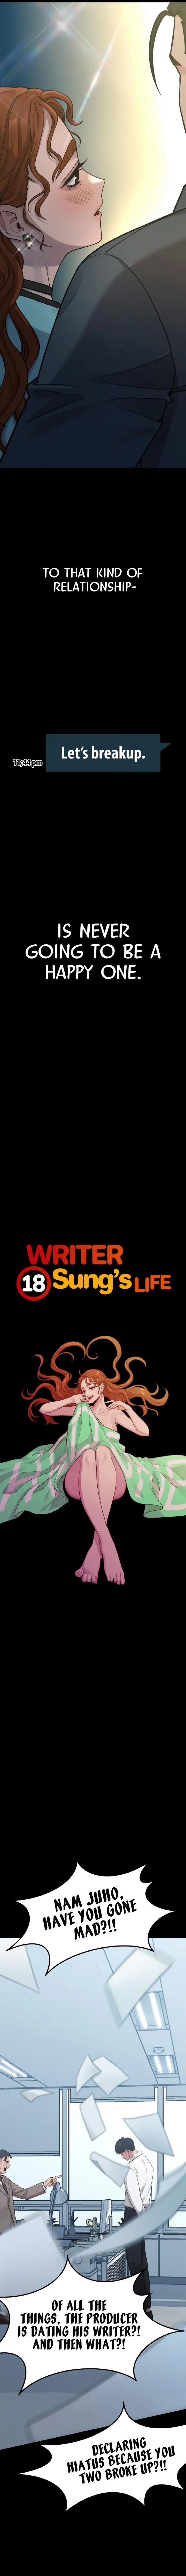 writer-sungs-life-chap-10-1